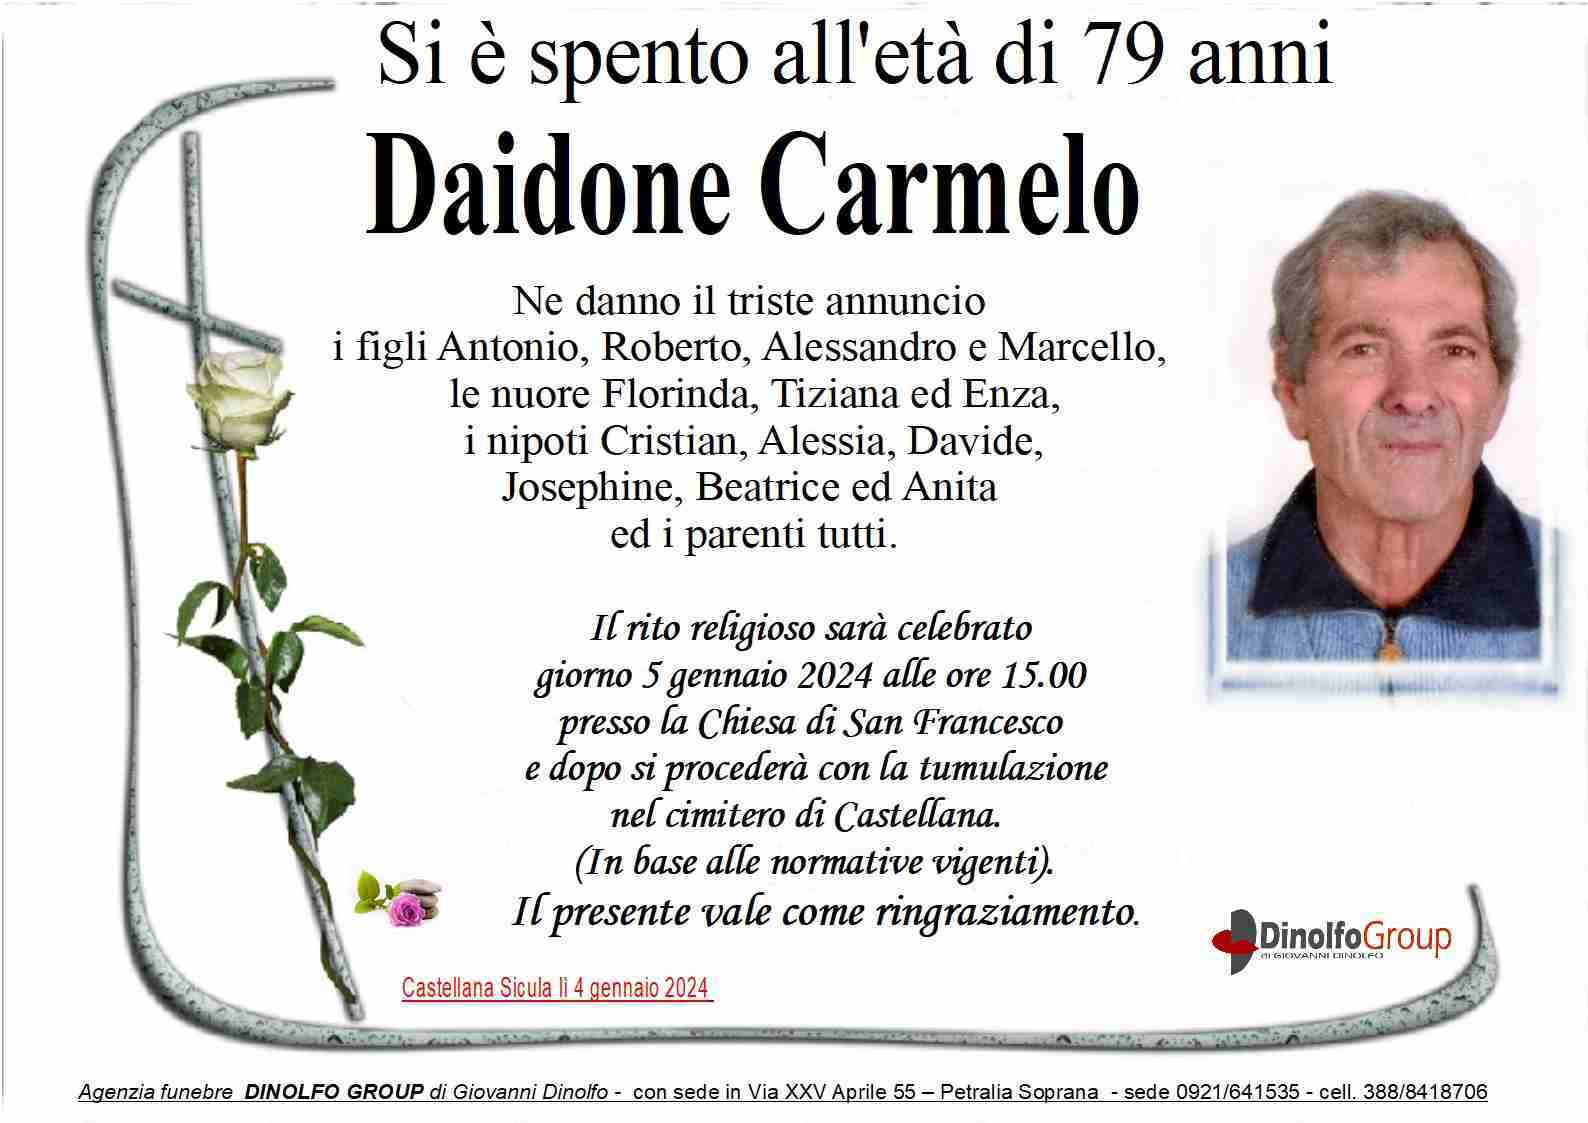 Carmelo Daidone